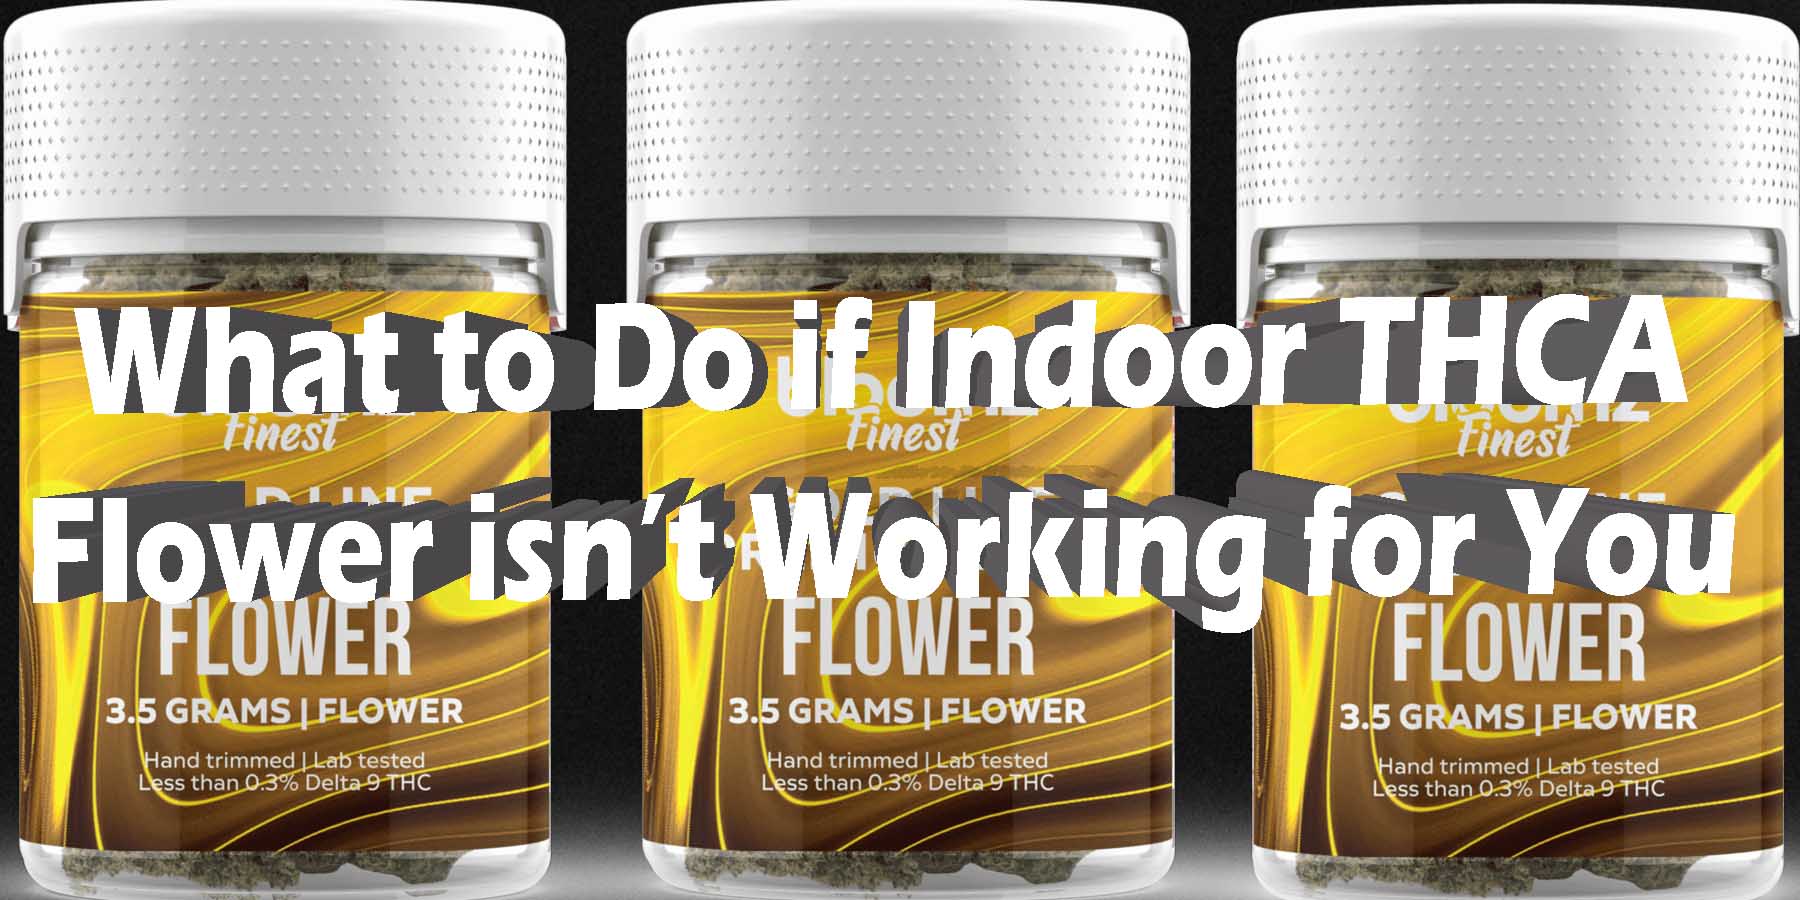 What to Do if Indoor THCA Flower isnt Working for You GoodPrice GetNearMe LowestCoupon DiscountStore Shoponline VapeCarts Online StrongestSmoke ShopBinoid THC